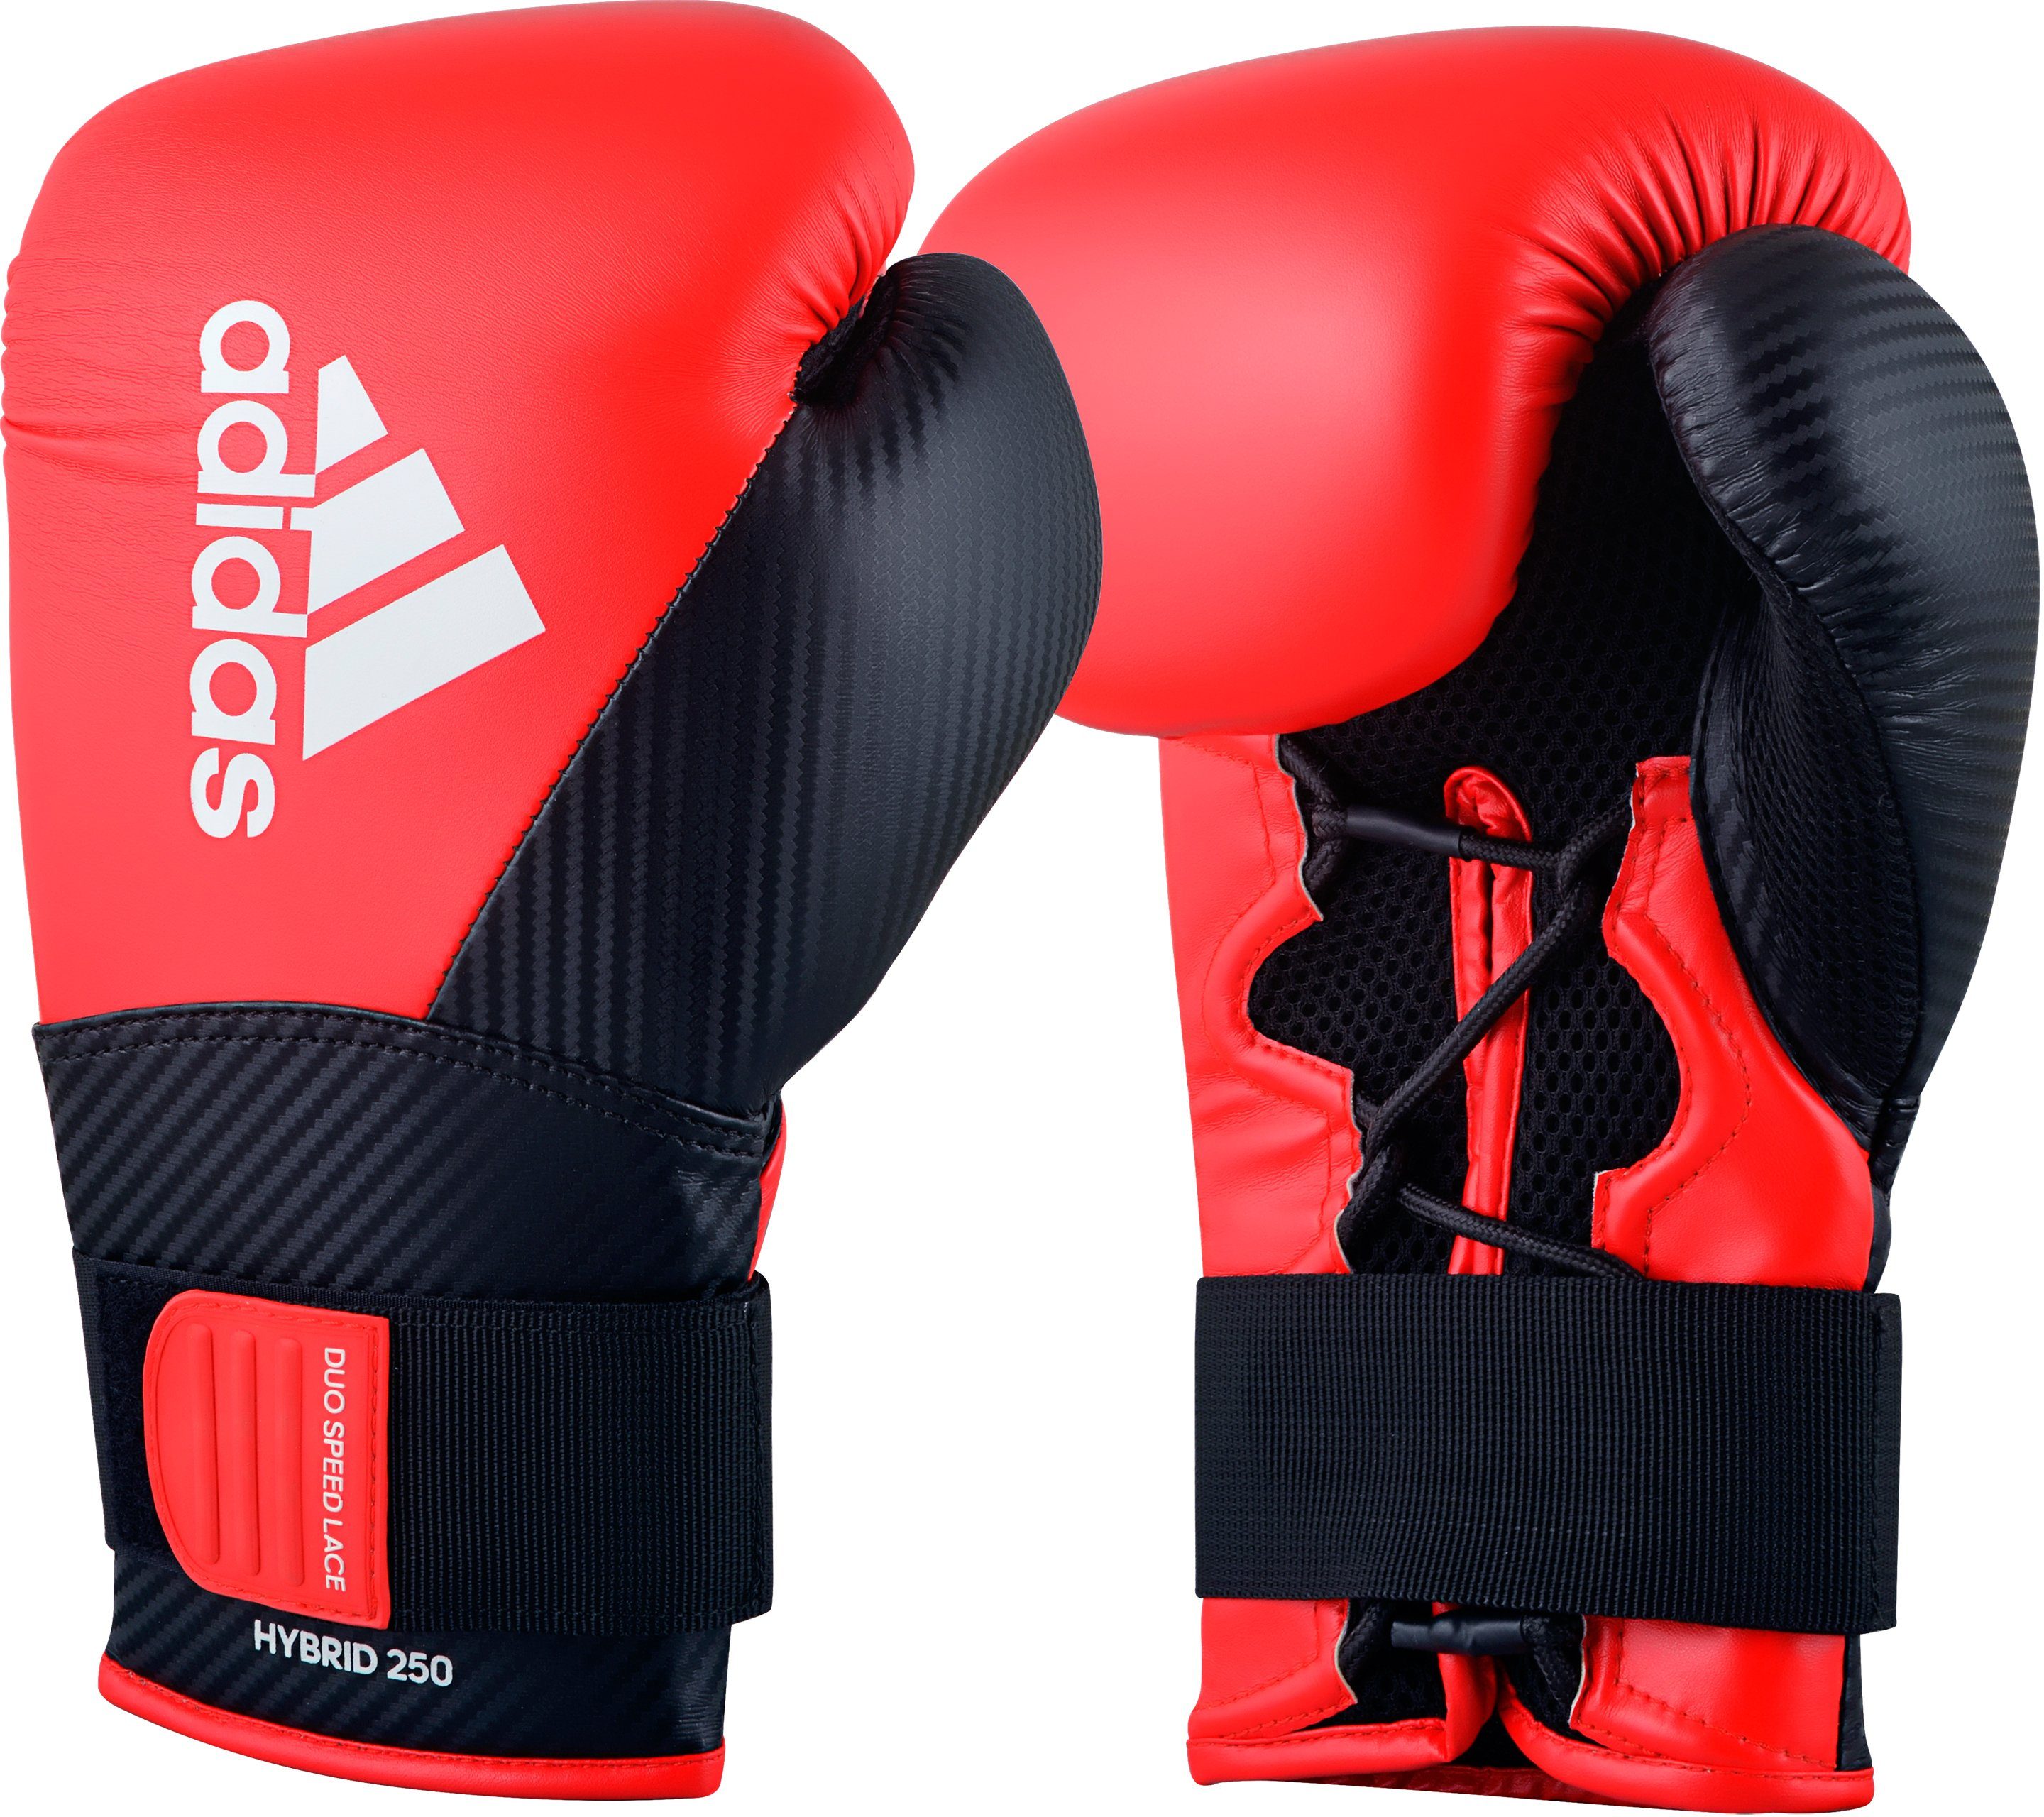 Performance Boxhandschuhe adidas rot/schwarz